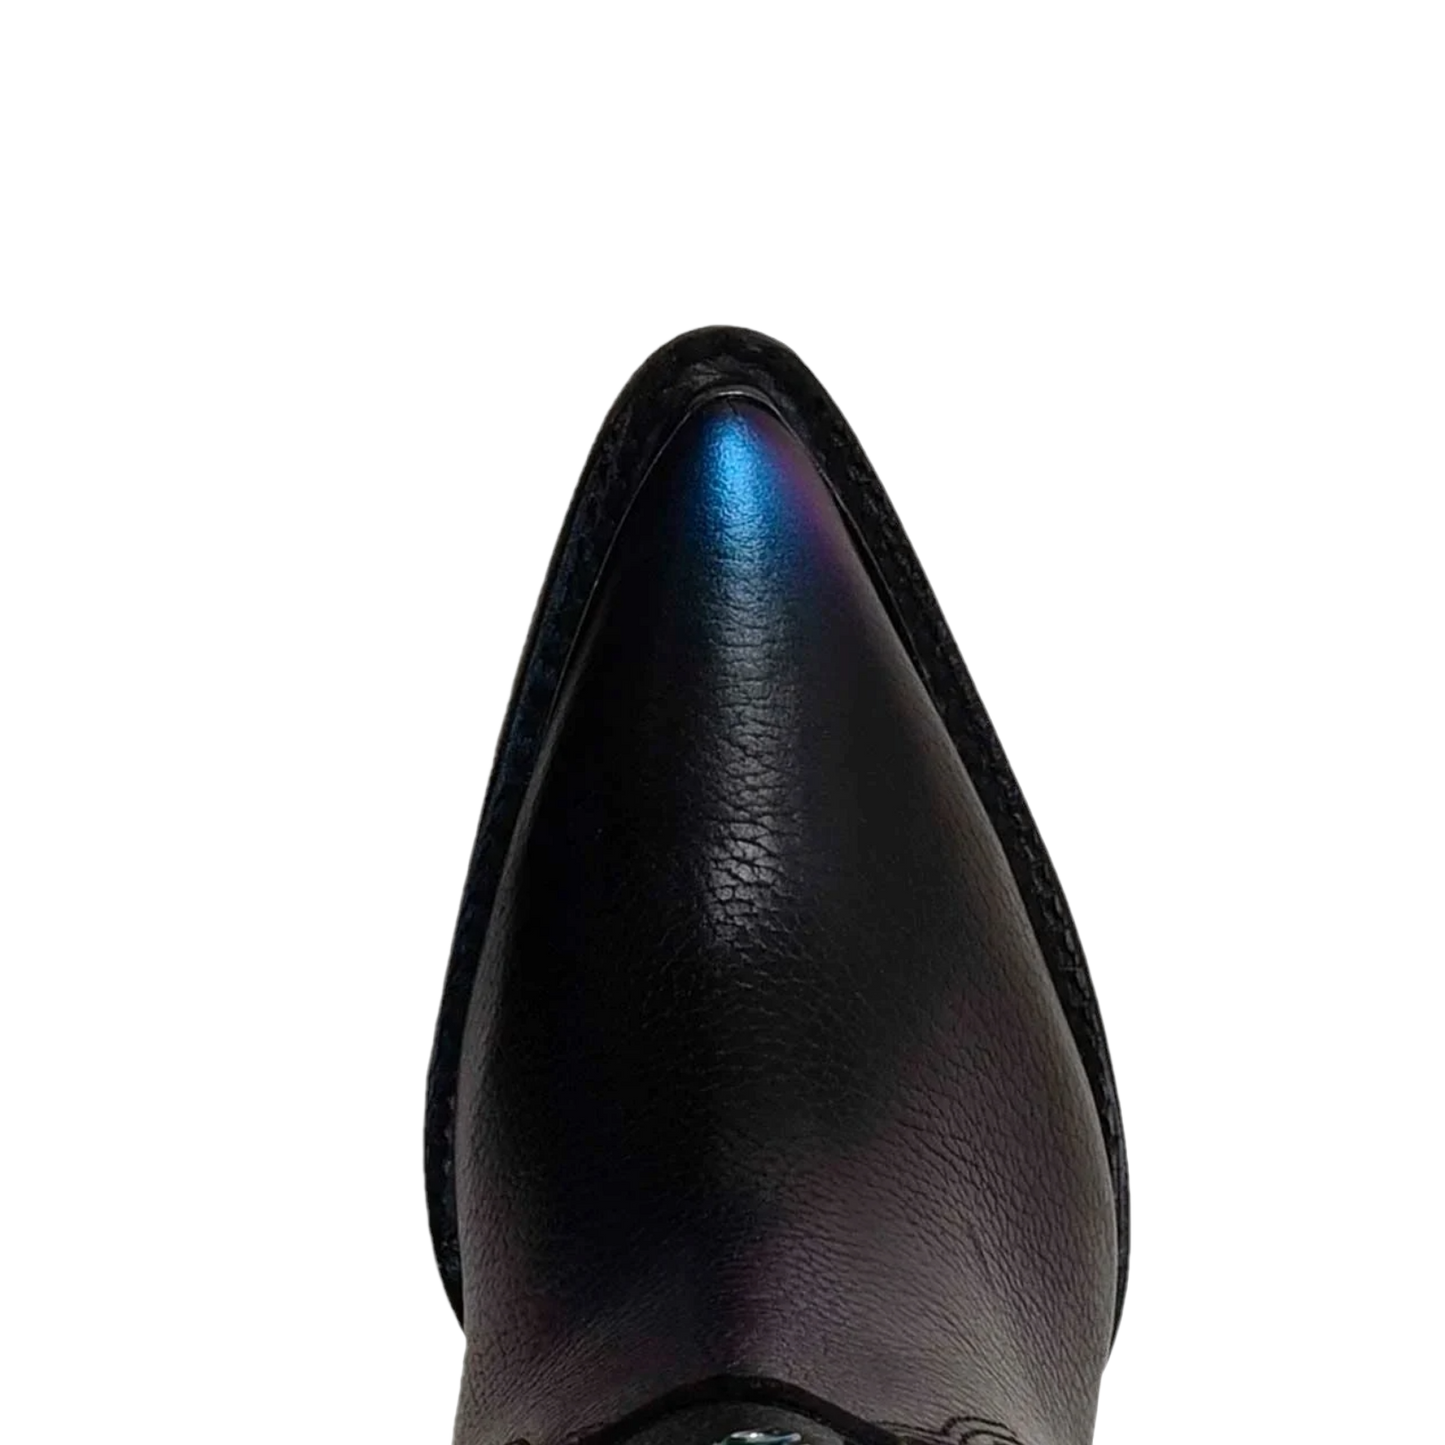 Cuadra Ladies Studded & Embroidered Black Pointed Toe Boots CU727